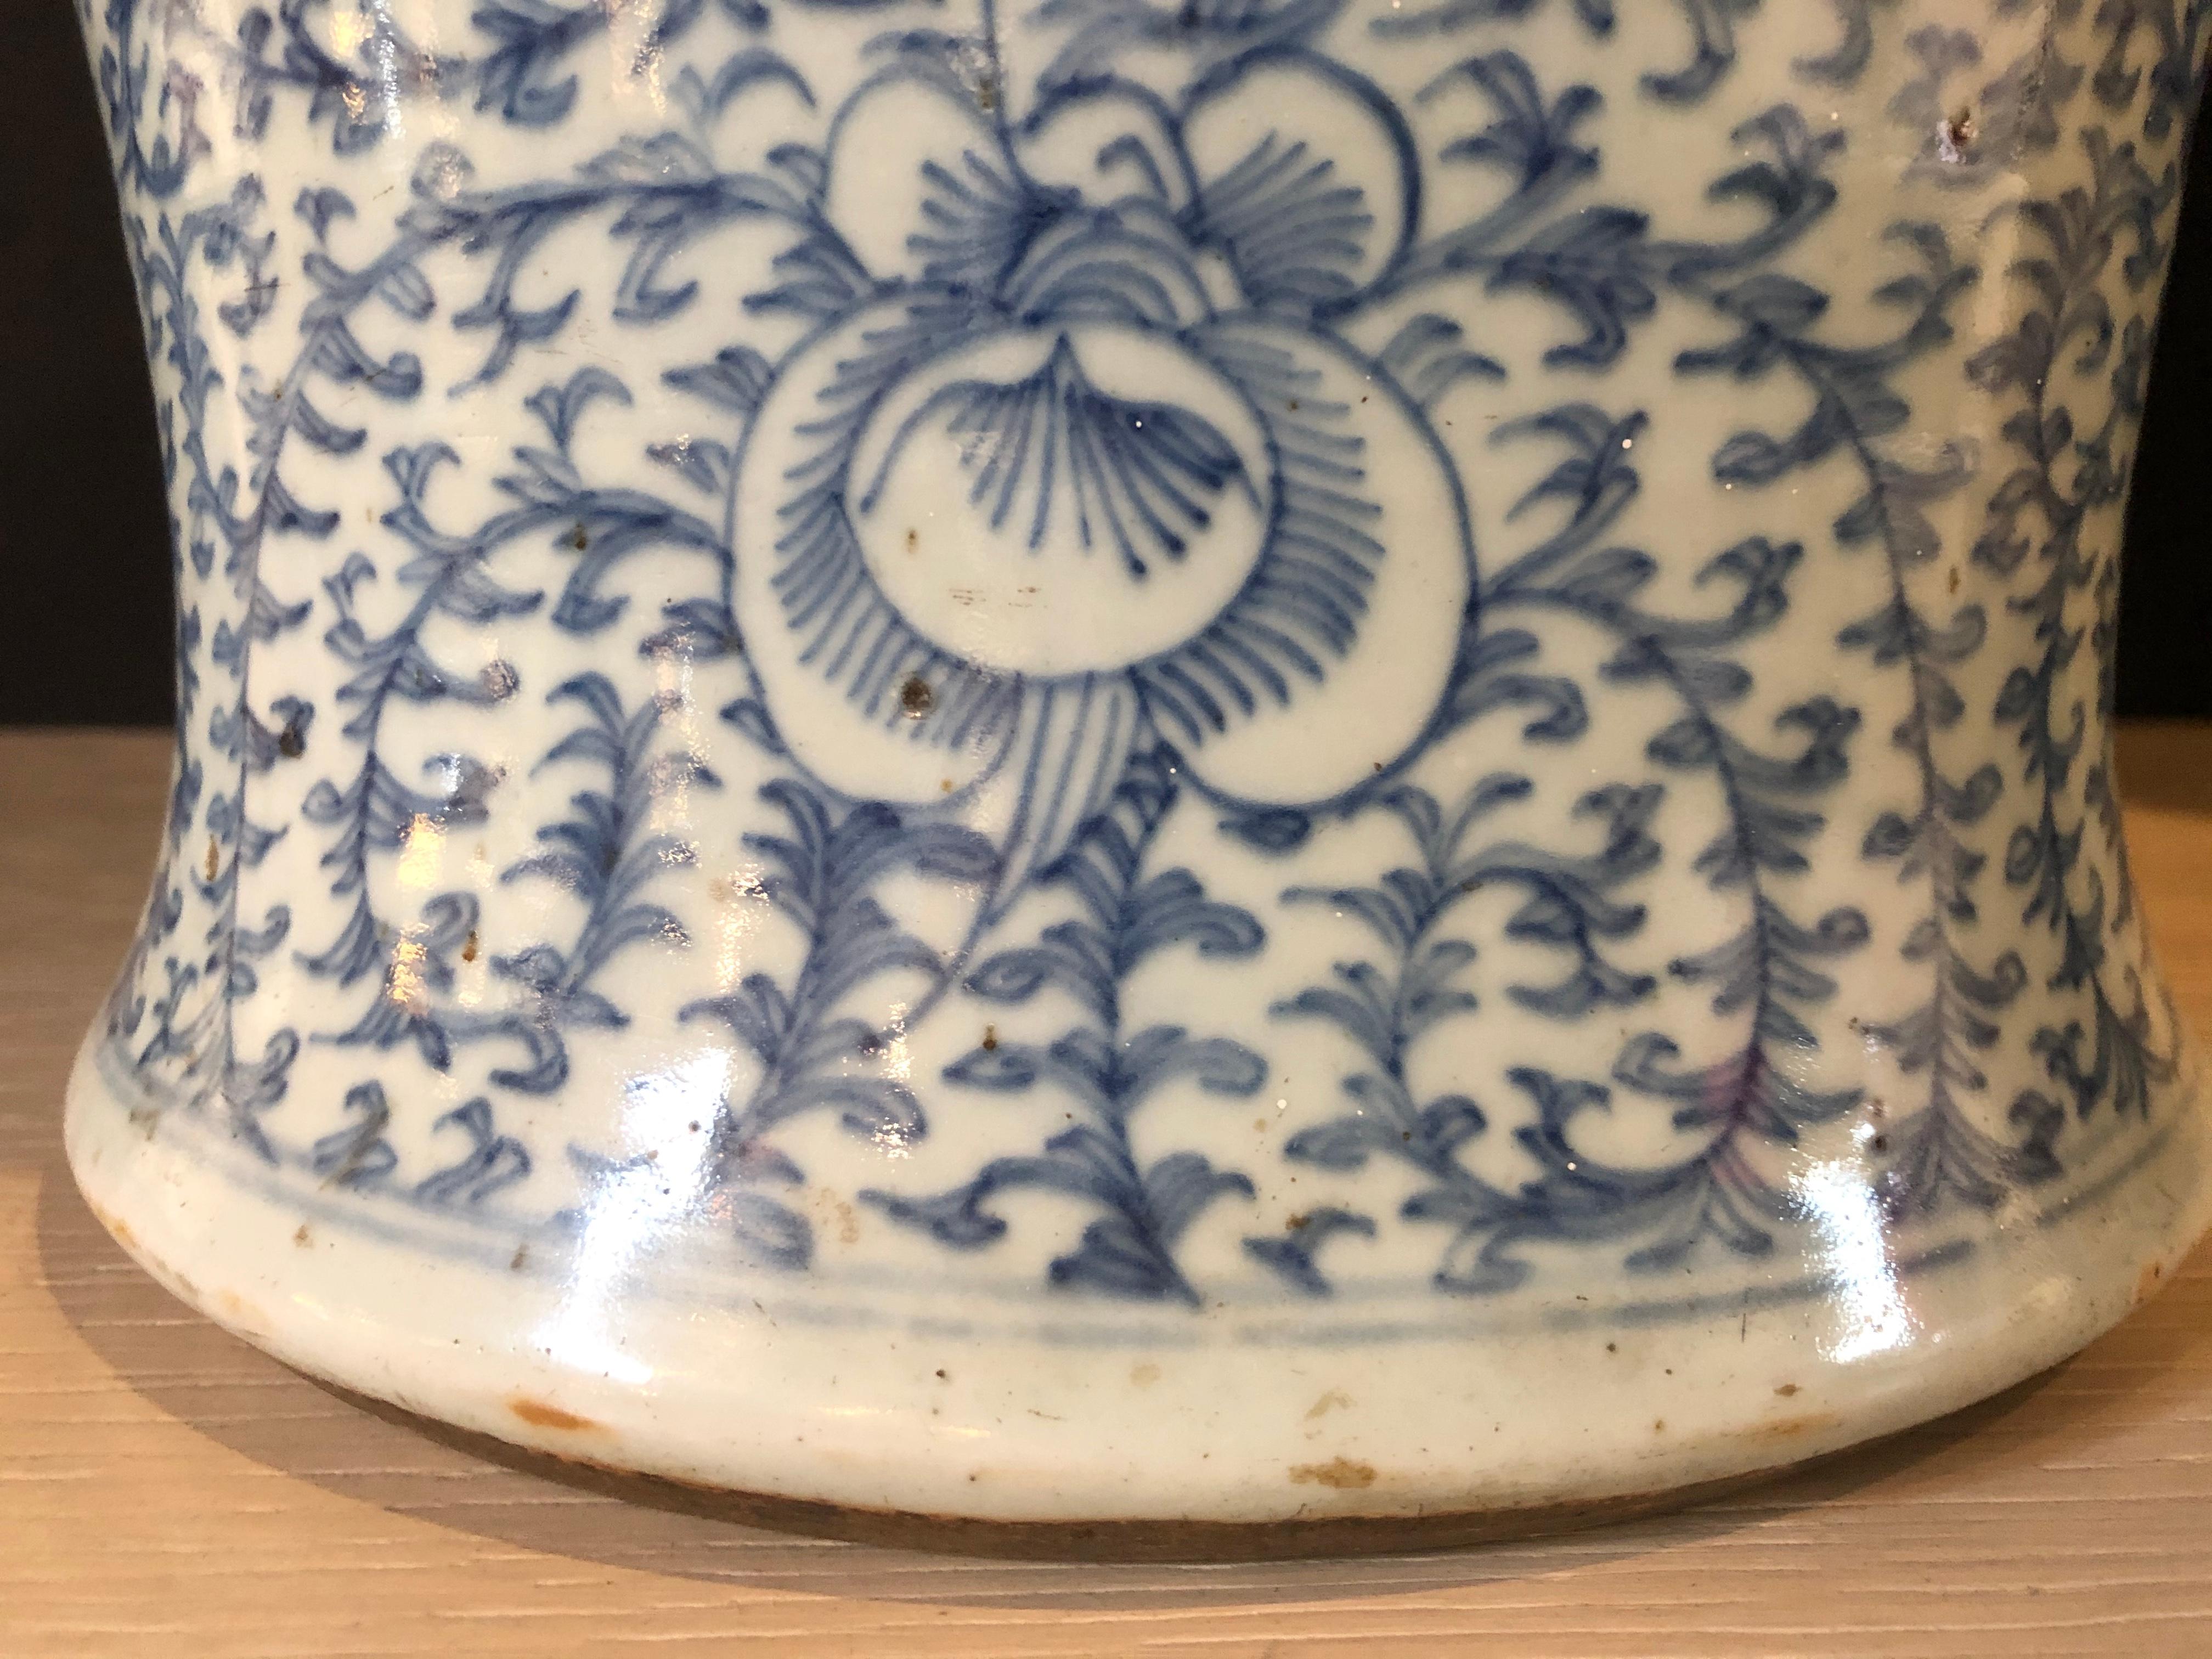 Porcelain Blue and White Chinese Lidded Ginger Jar, Vase or Urn, Signed on Bottom